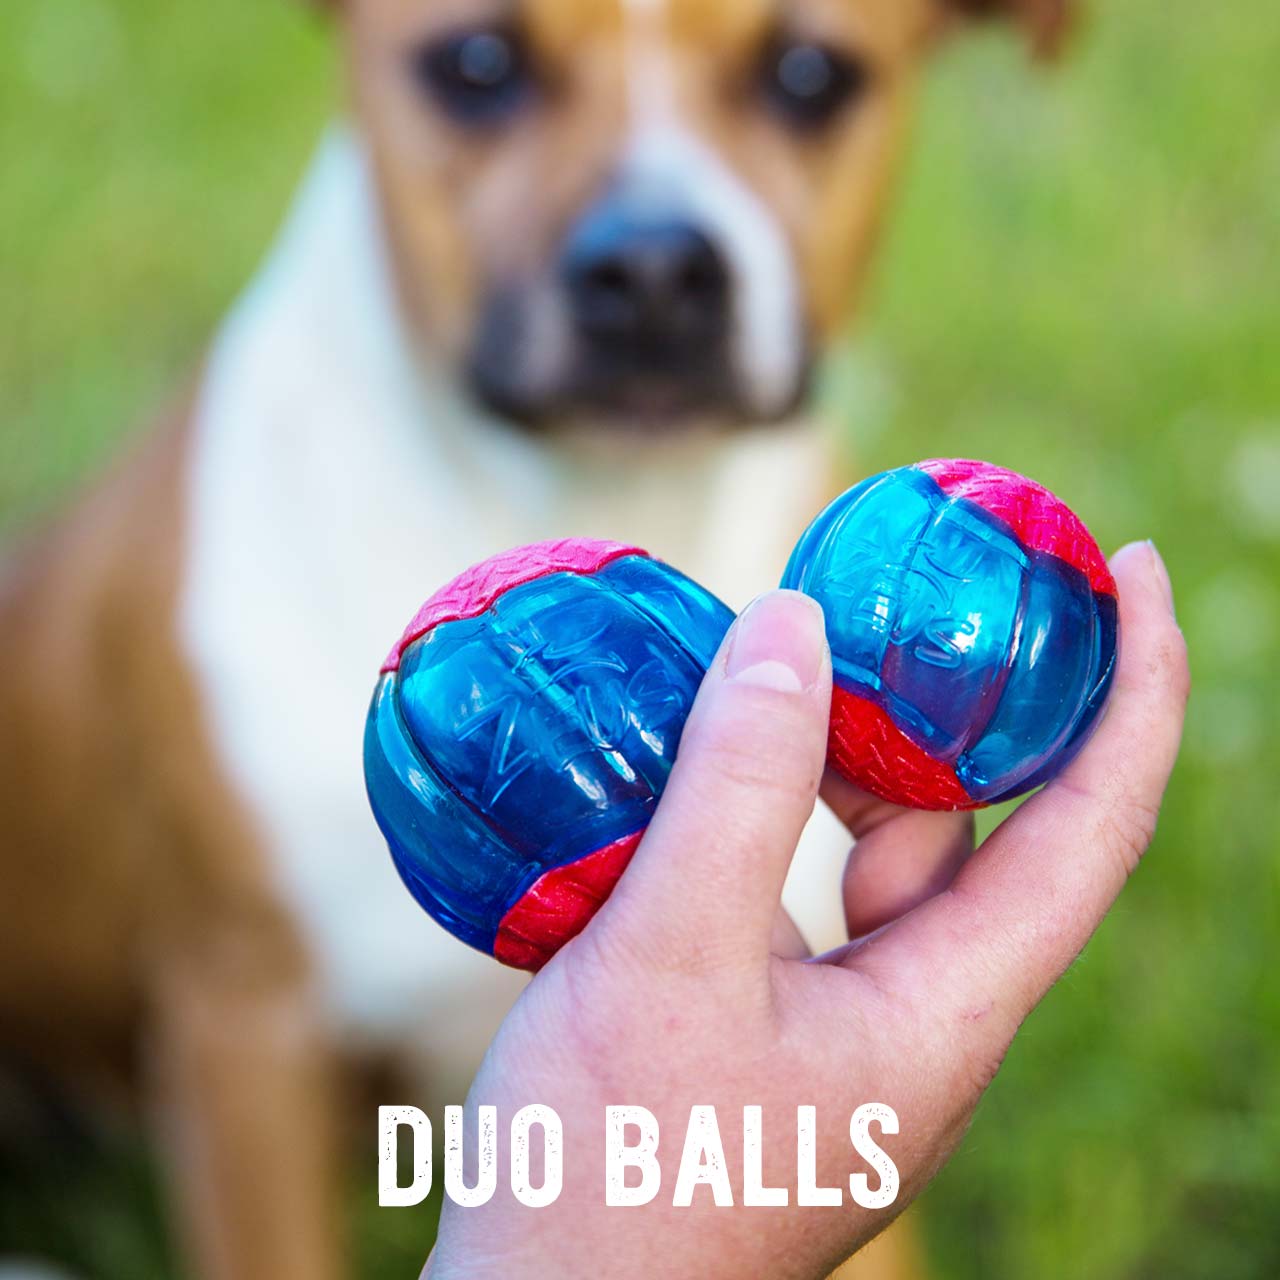 Duo balls